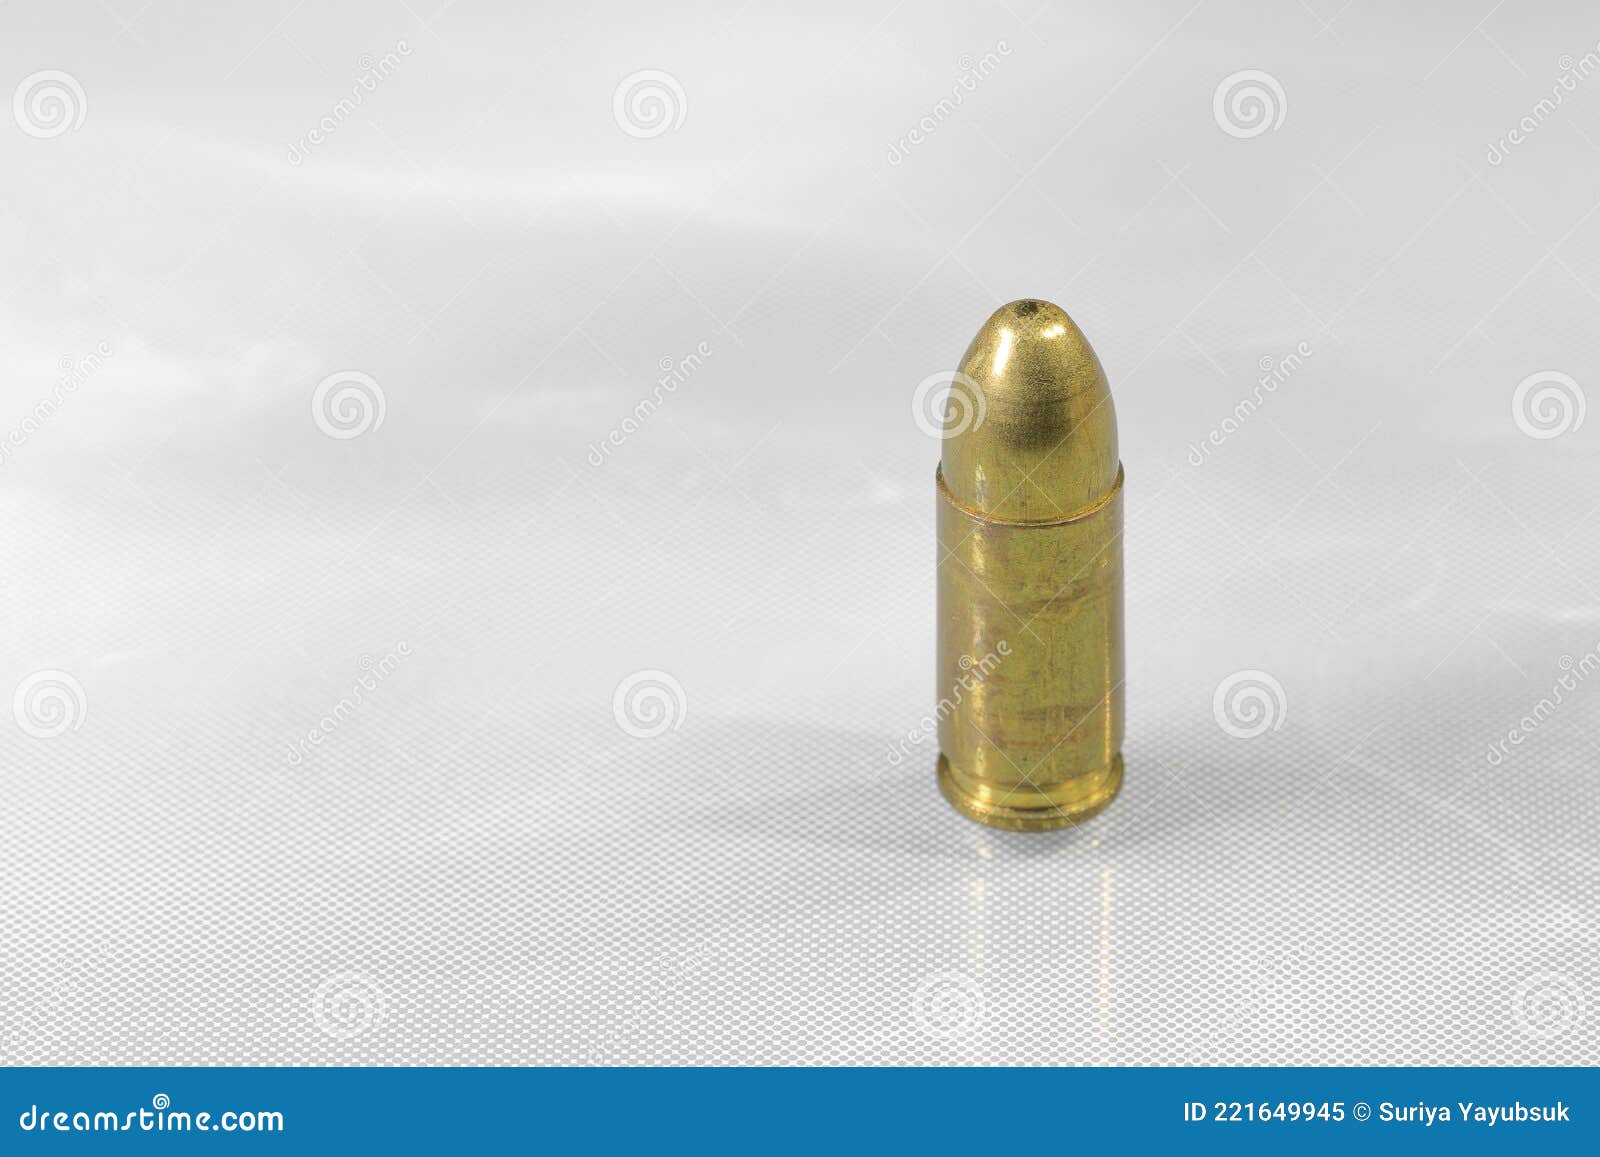 close up bullet 9mm parabellum fmj (full metal jacket )